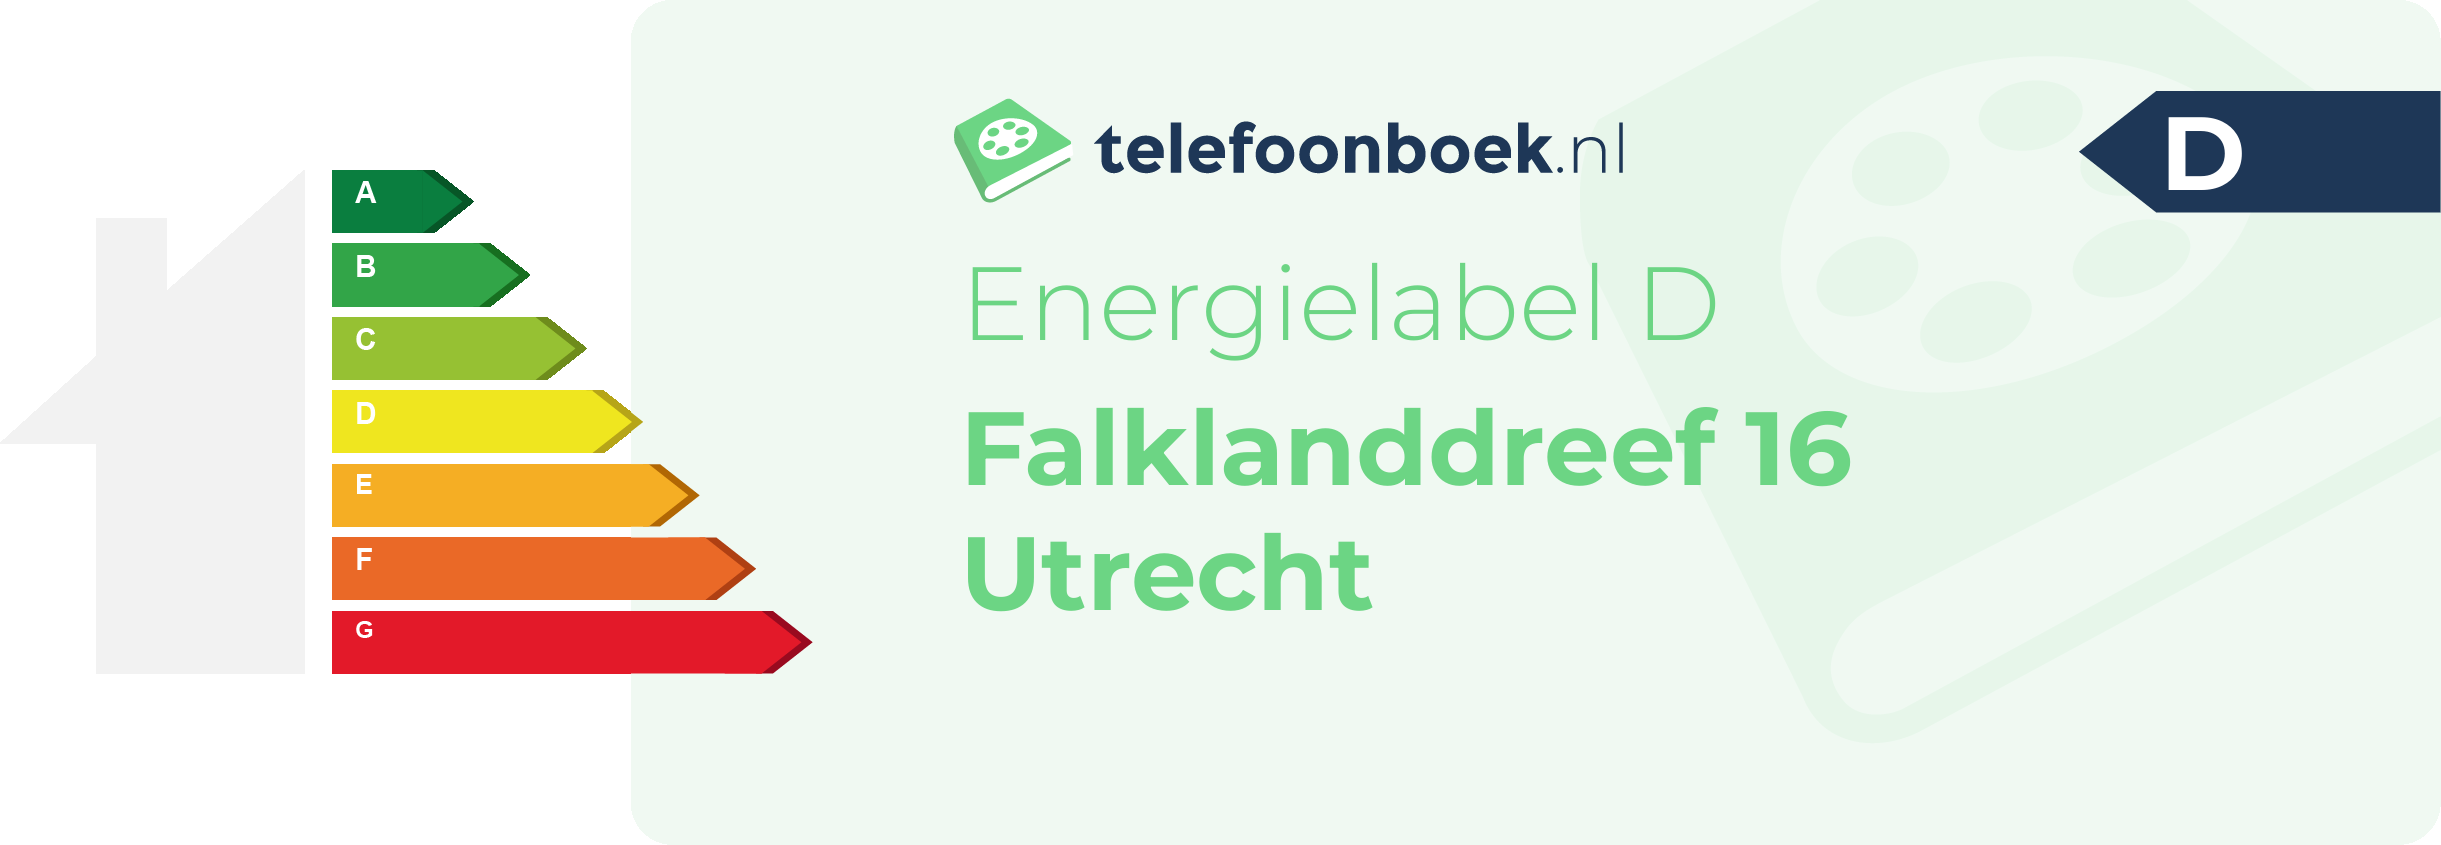 Energielabel Falklanddreef 16 Utrecht